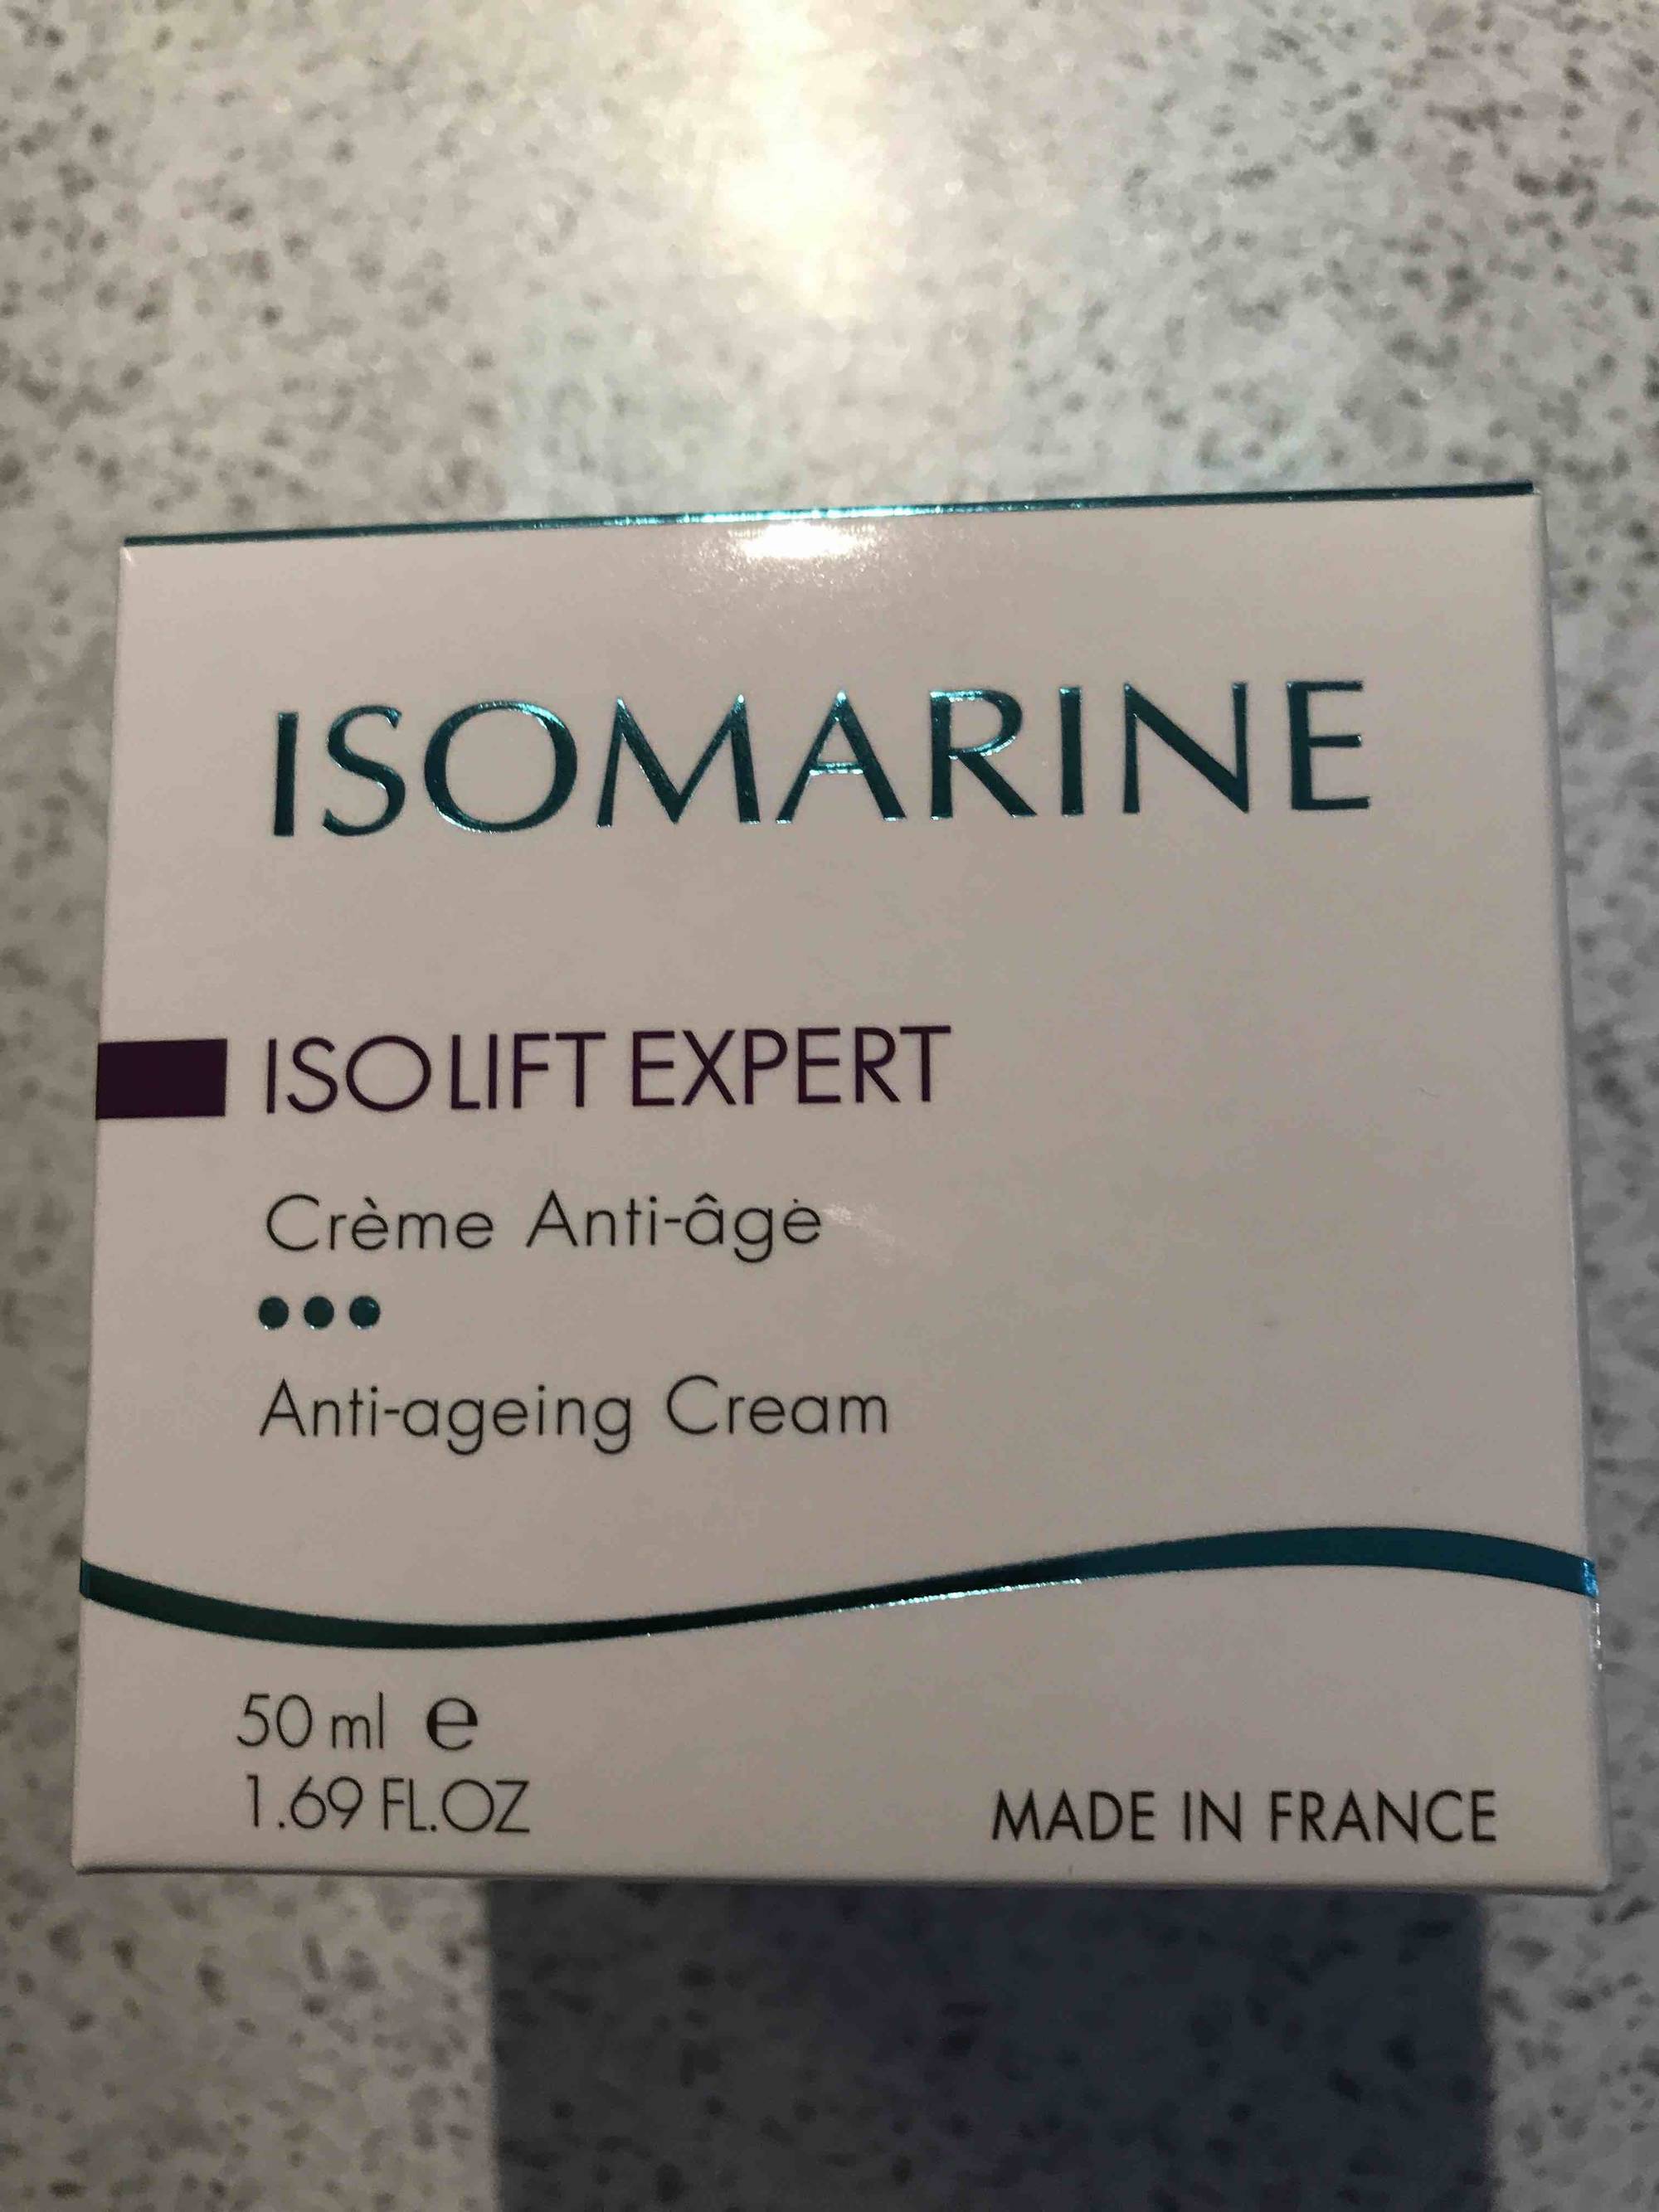 ISOMARINE - Iso lift expert - Crème anti-âge